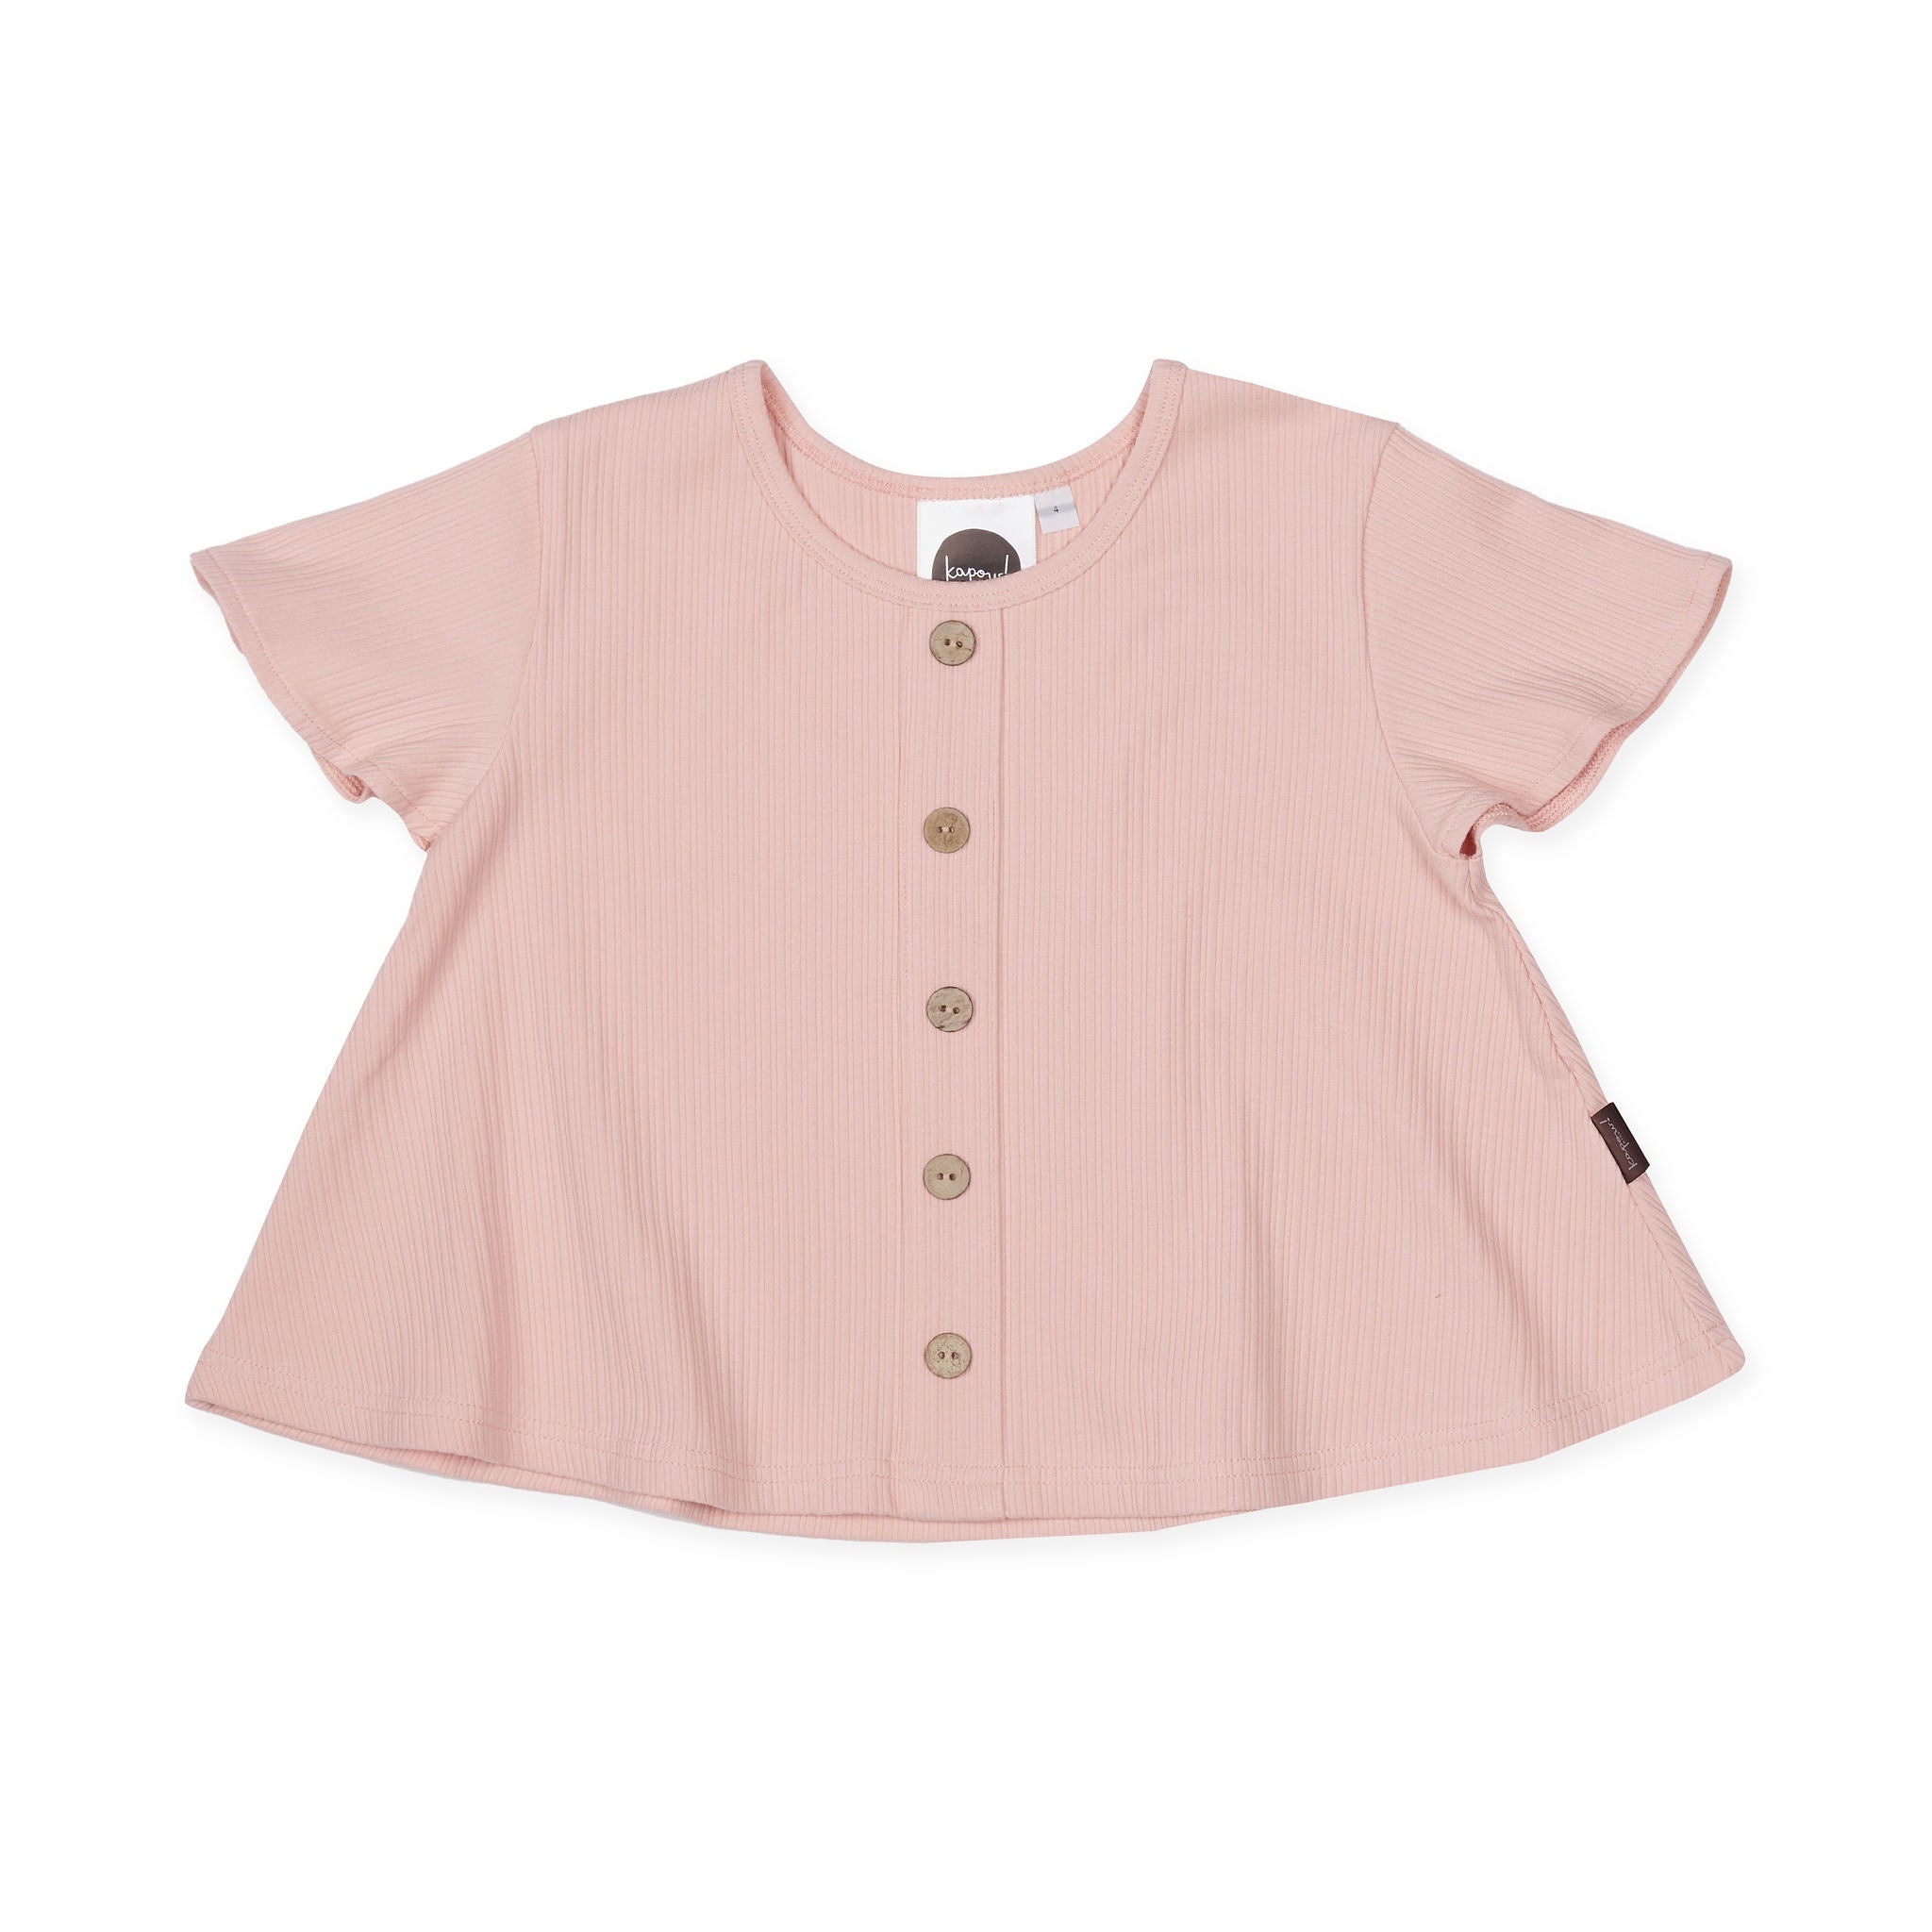 Kapow Kids - Rib Swing T-shirt - Shell Pink